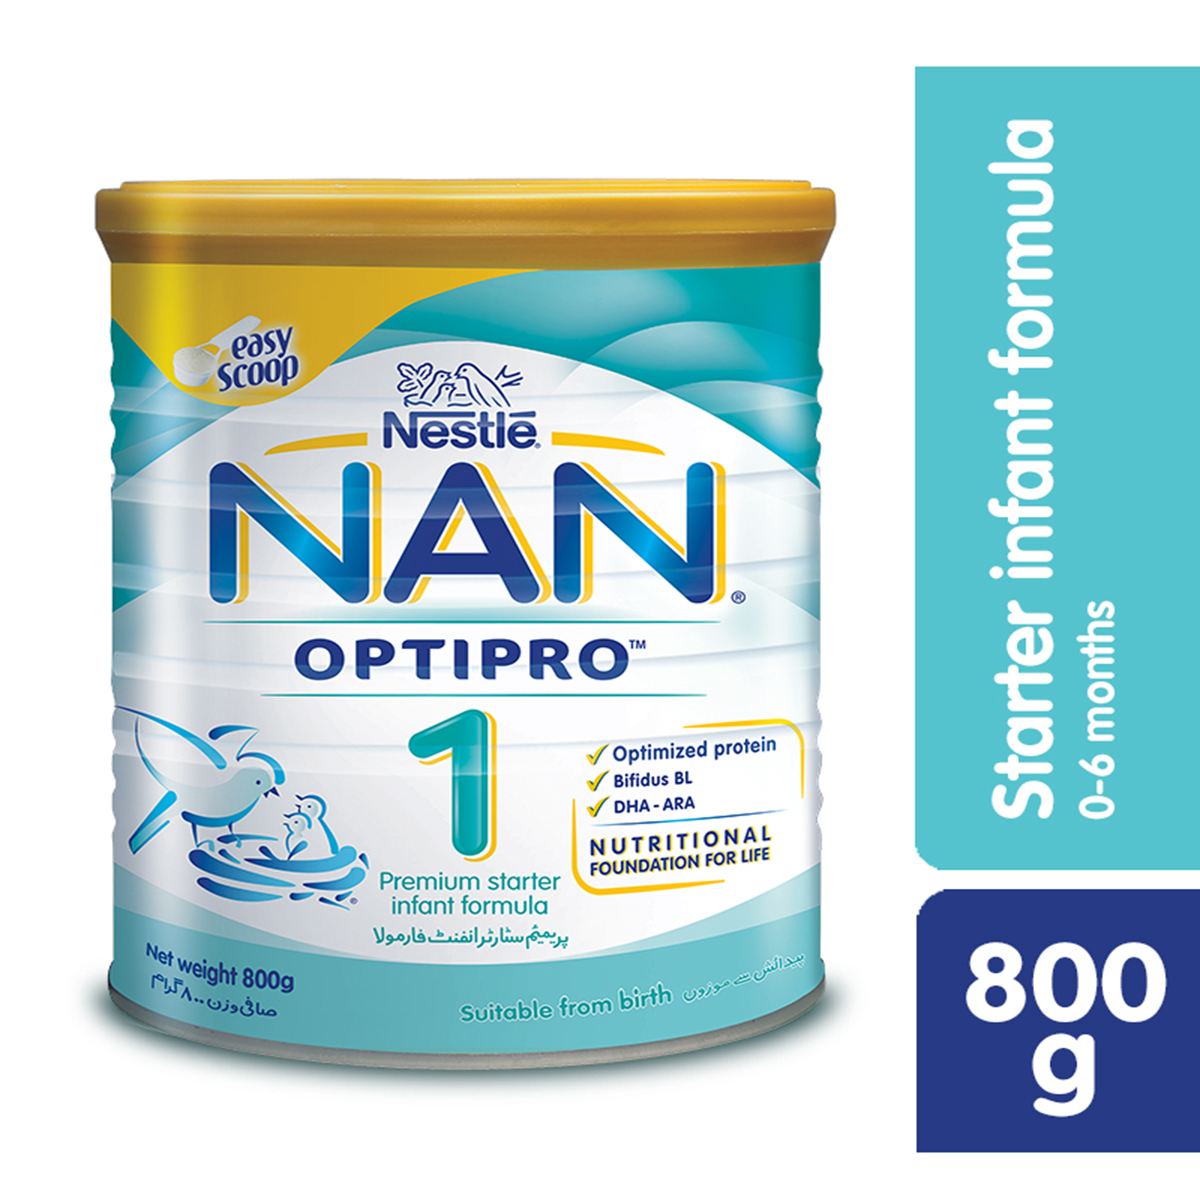 NAN Optipro 1 - Nestle - 10